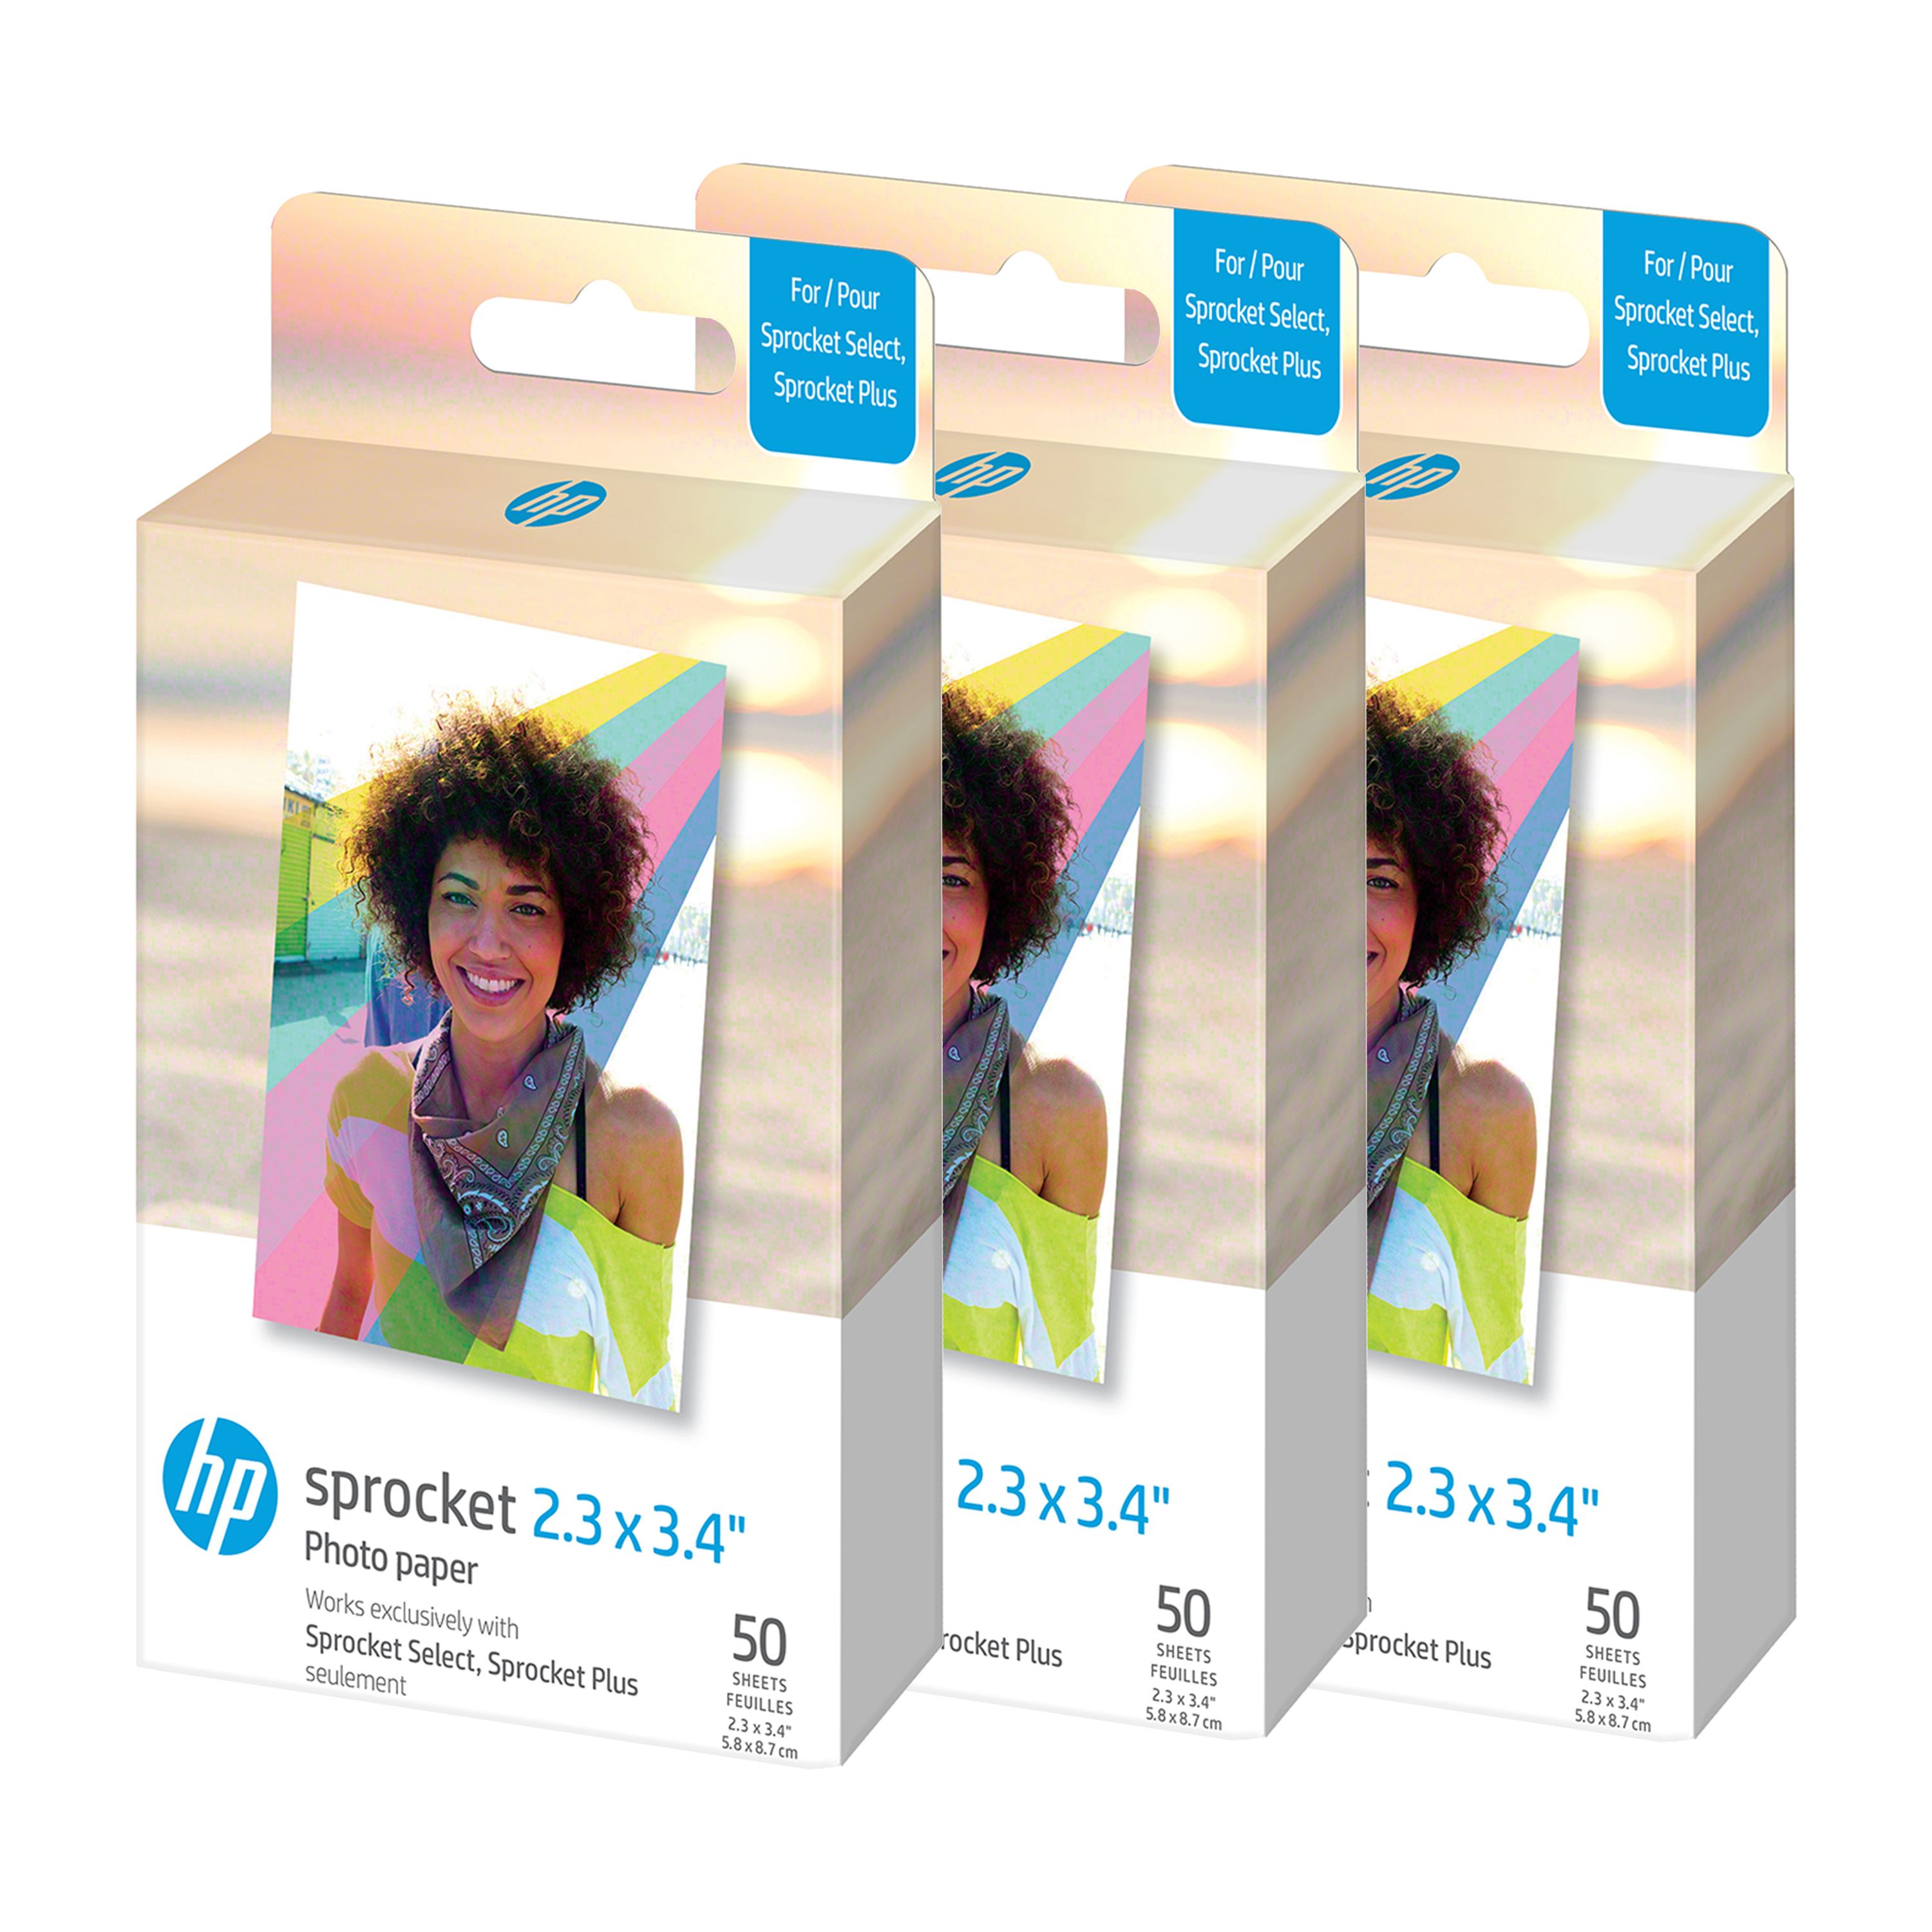 HP Sprocket 2.3 x 3.4” Zink Sticky-backed Photo Paper (20 Sheets